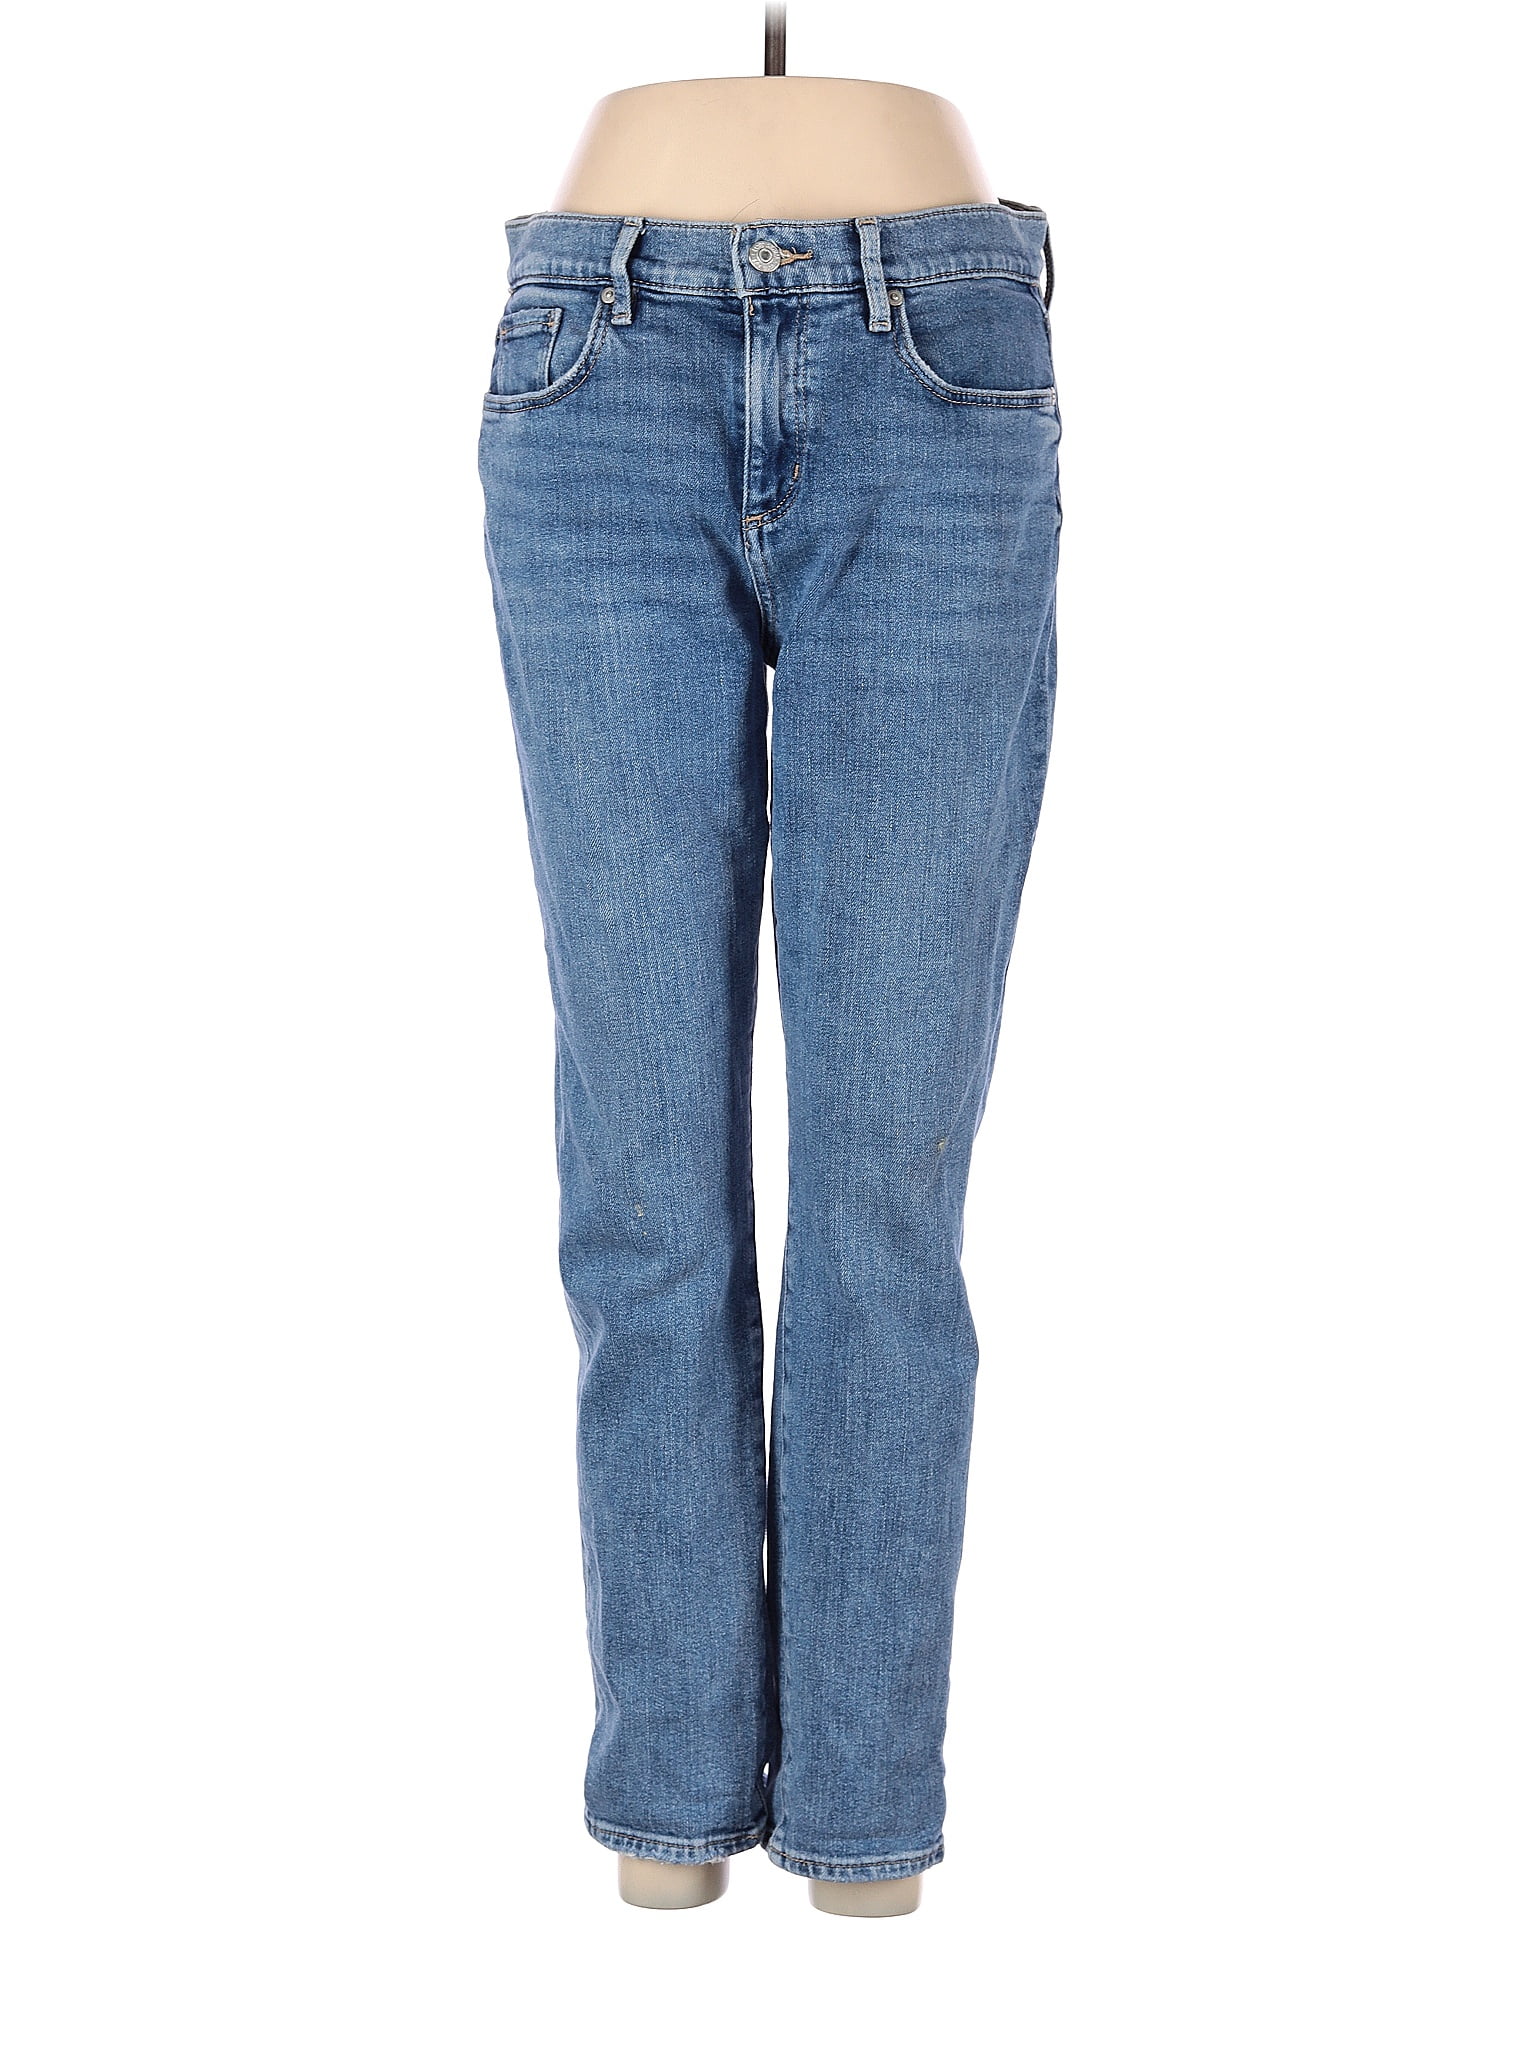 Ann Taylor LOFT Solid Blue Jeans 28 Waist - 75% off | thredUP